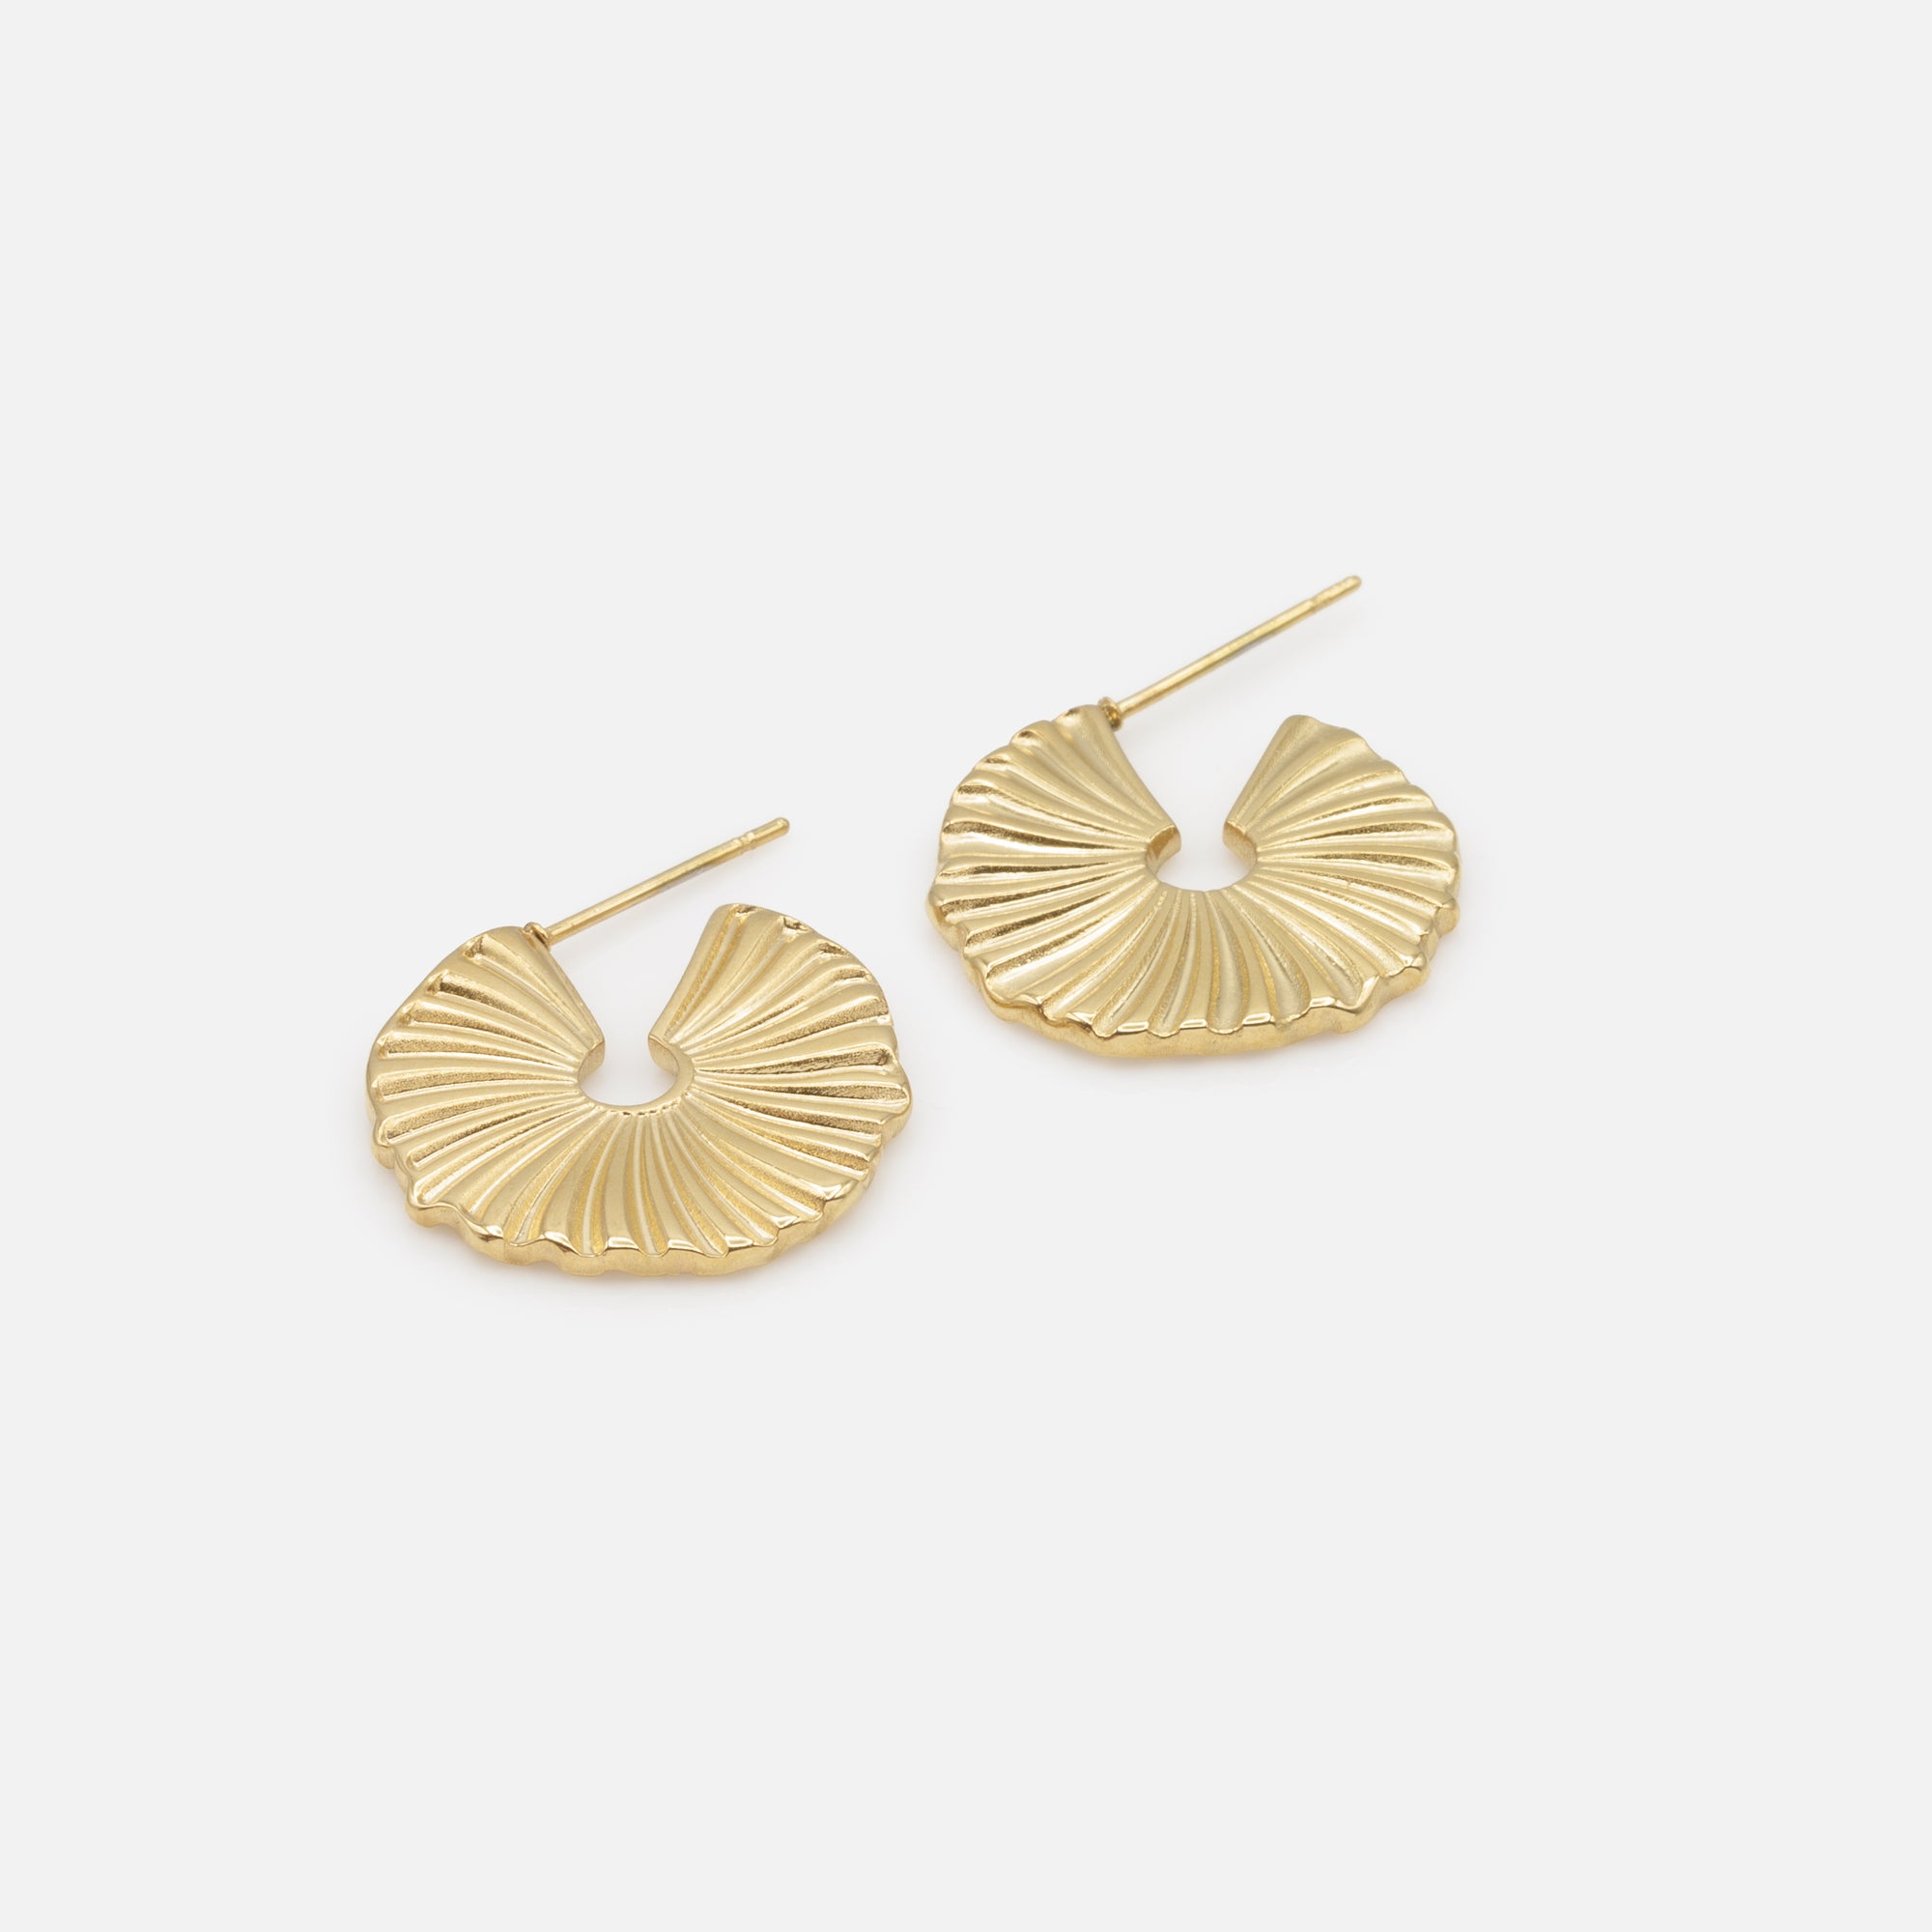 Gold shell earrings in stainless steel